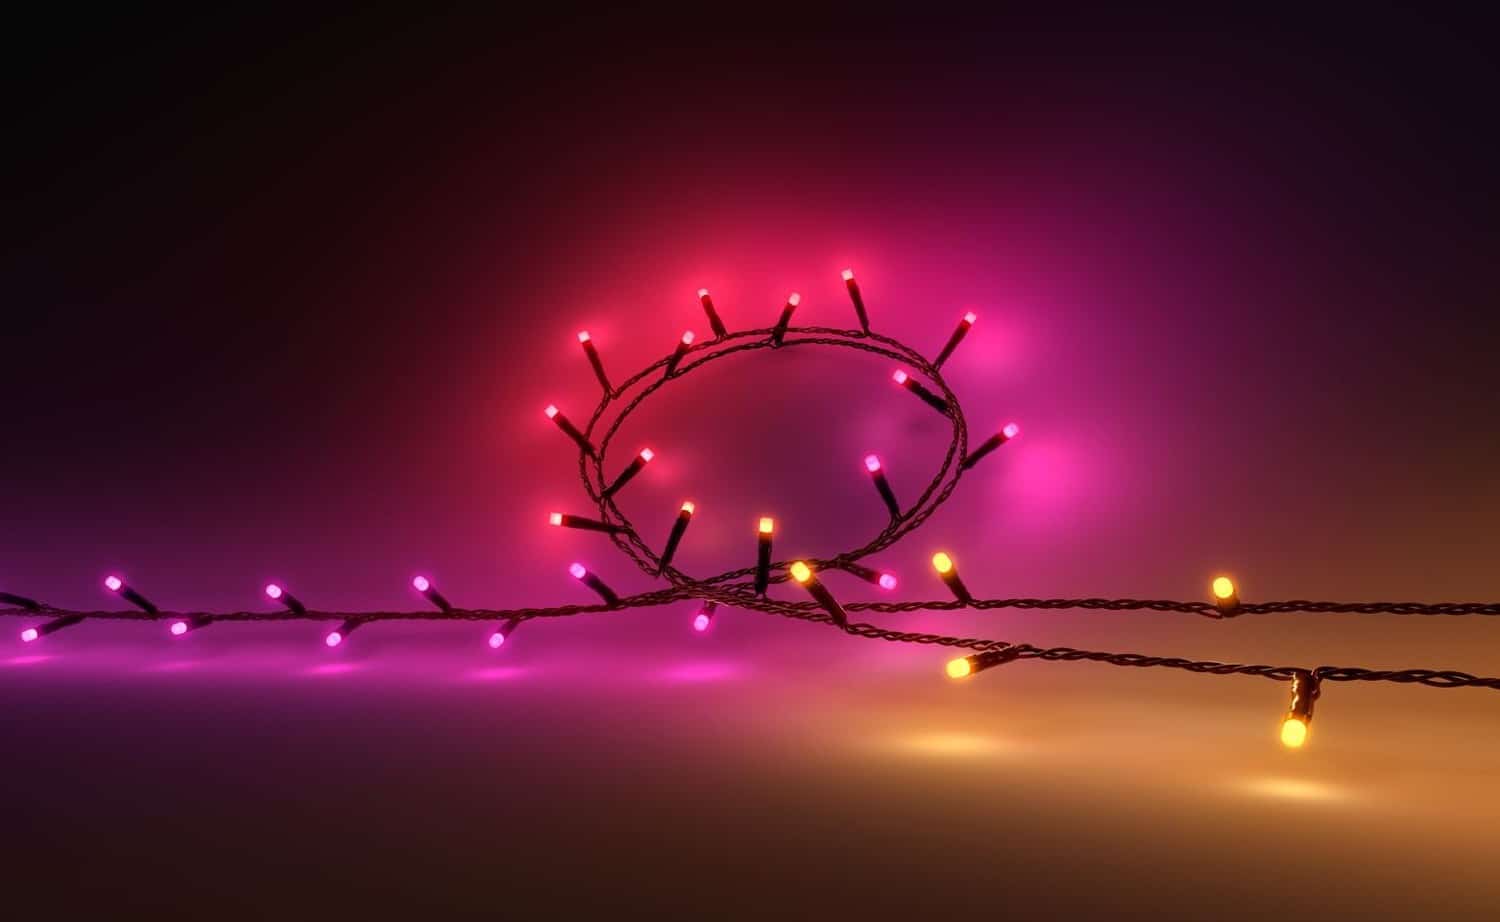 Hueblog: Hue Festavia string light always consumes between 16-17 watts